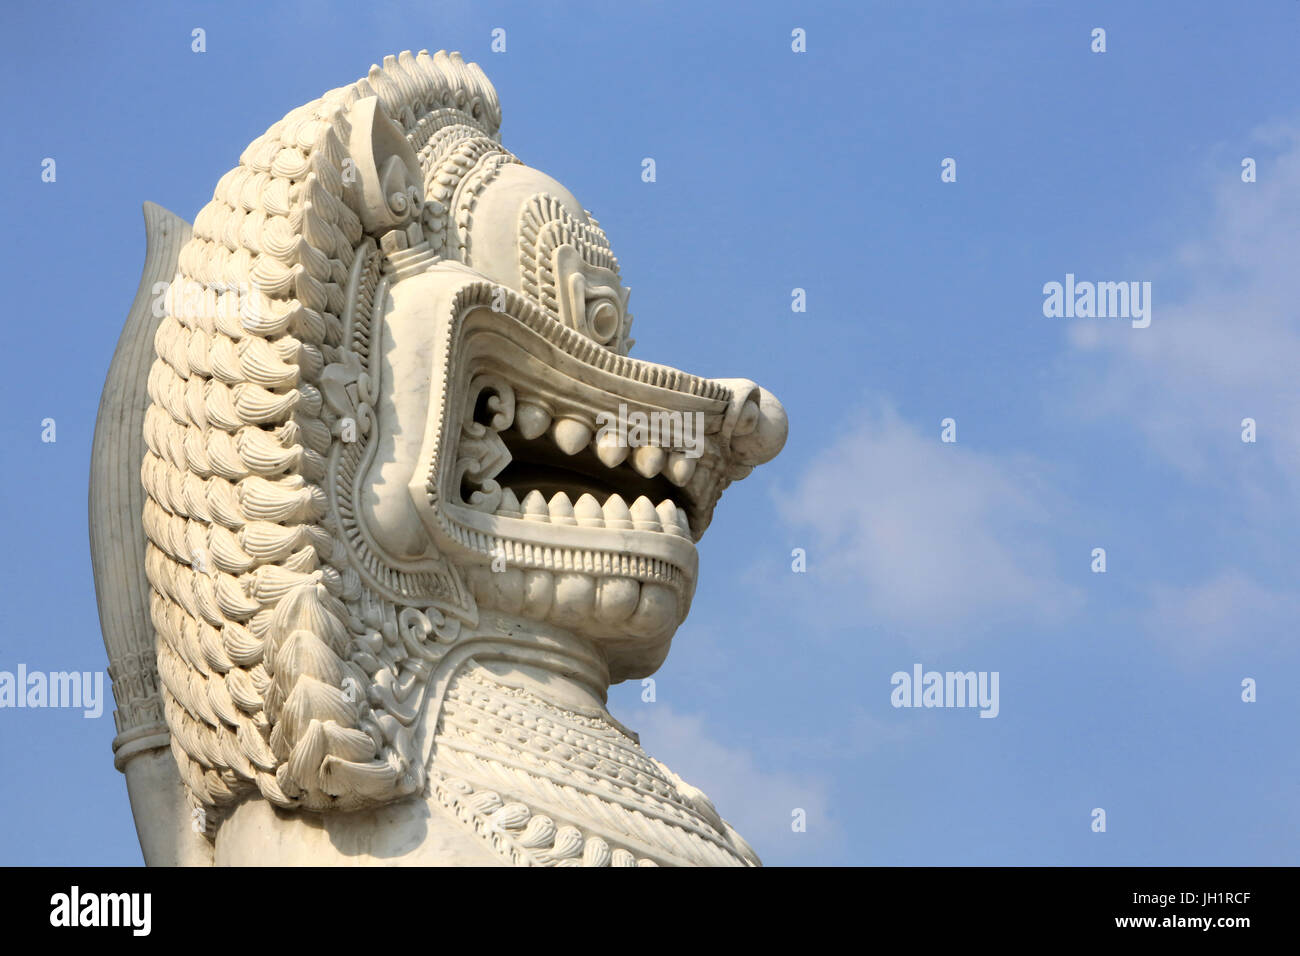 Singhas o mitico stilizzata leoni, proteggendo l'ingresso. Tempio in marmo. Il Wat Benchamabophit Dusitvanaram Ratchaworawiharn. 1899. Bangkok. Thailandia. Foto Stock